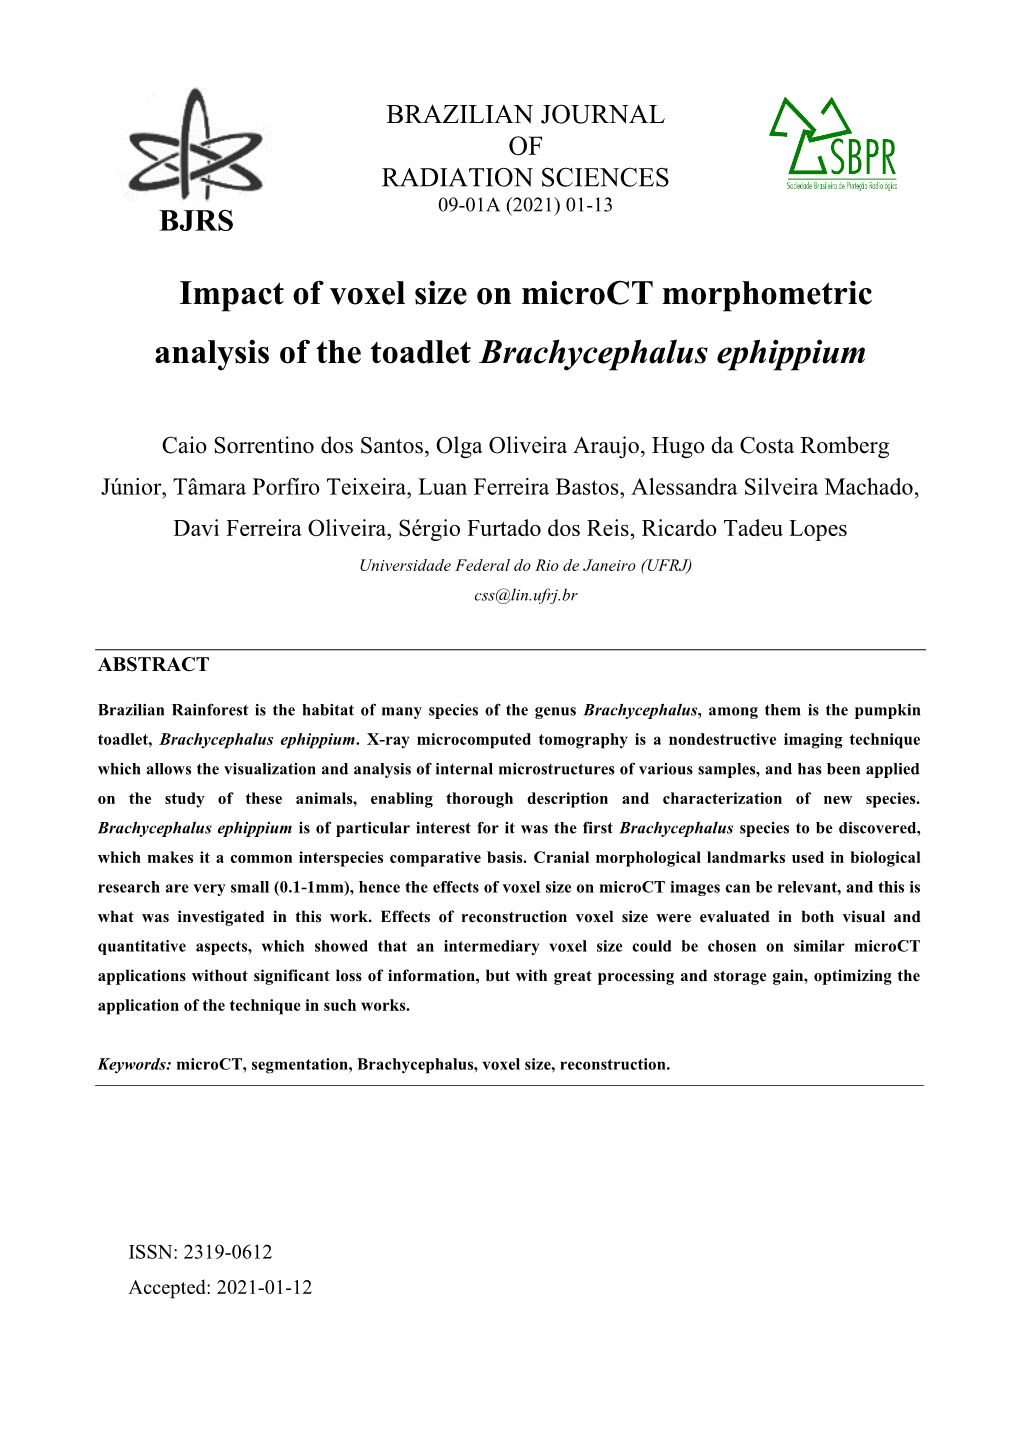 Impact of Voxel Size on Microct Morphometric Analysis of the Toadlet Brachycephalus Ephippium